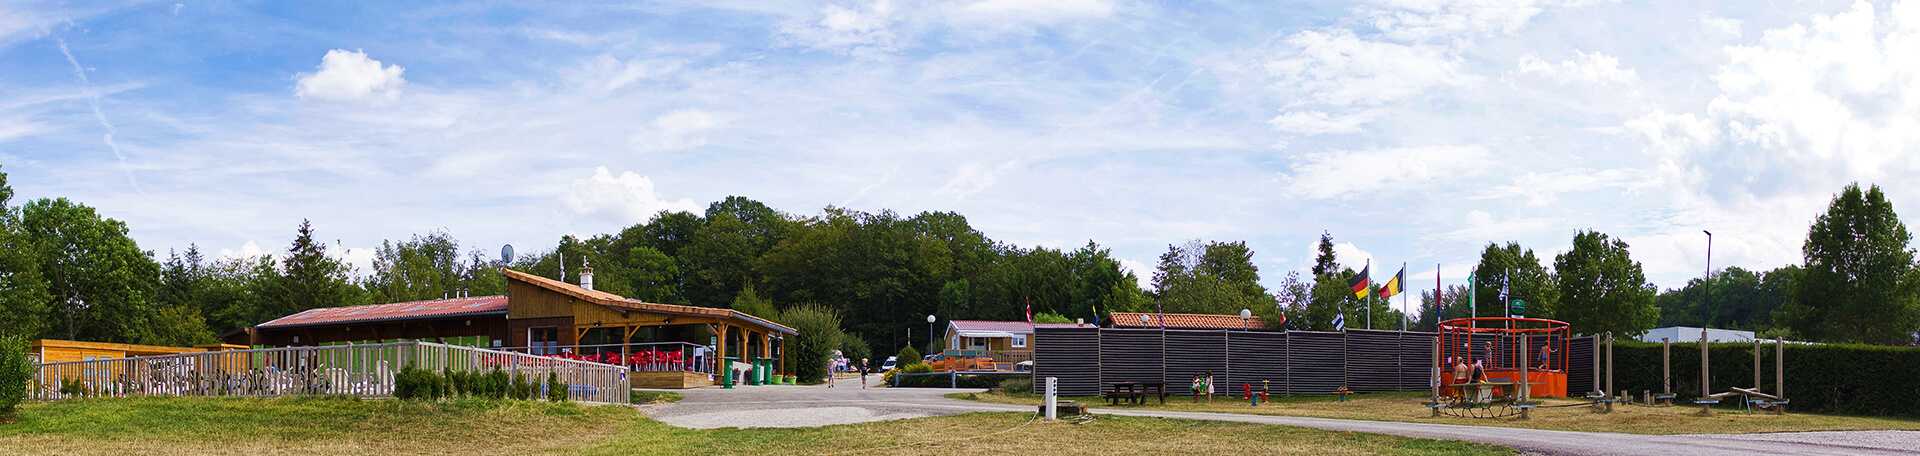 Campsite in the east region, Camping Porte des Vosges